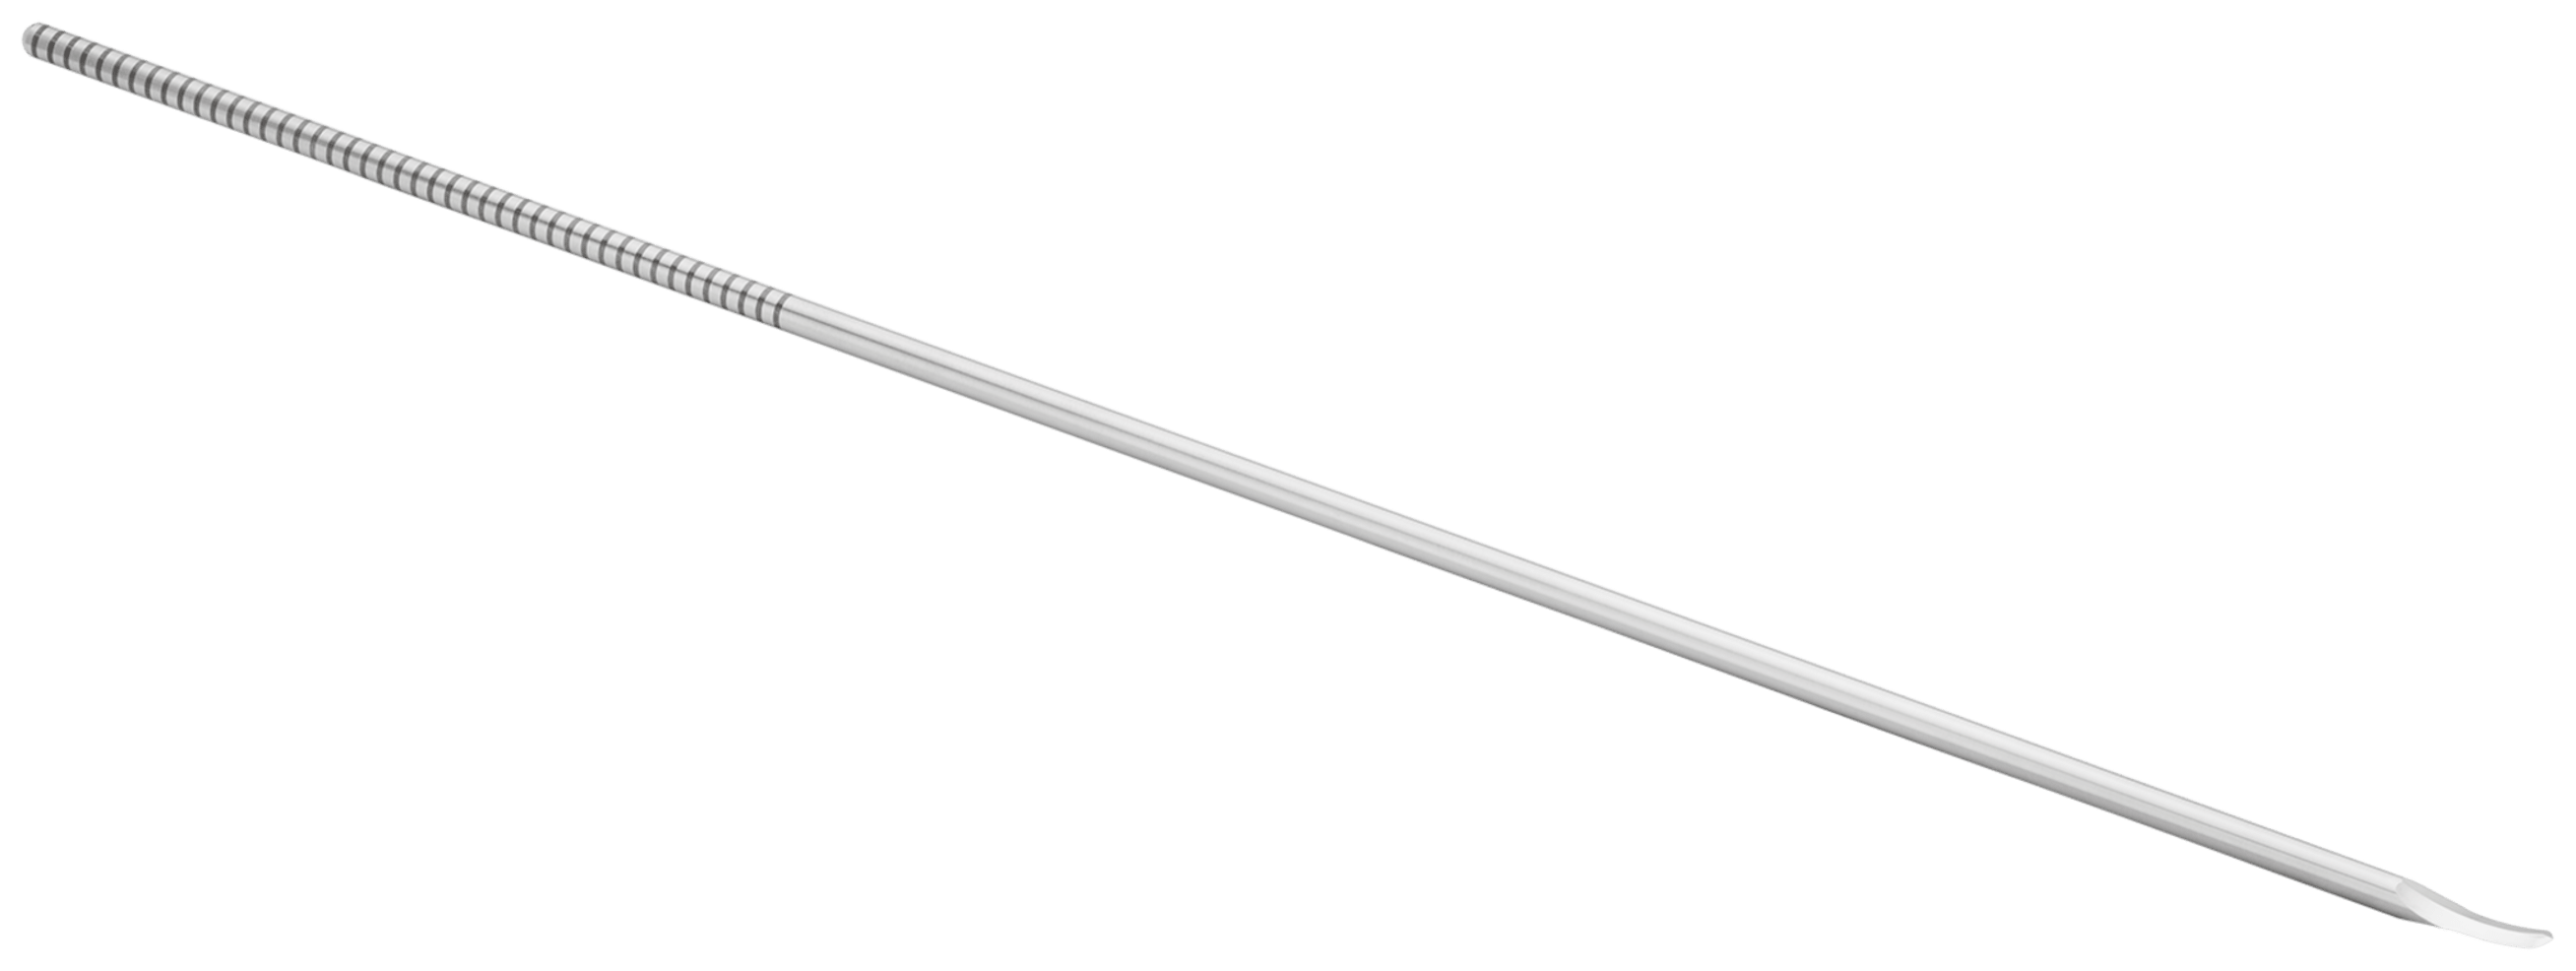 CapsuleCut Blade, 4 mm, Detachable, Curved